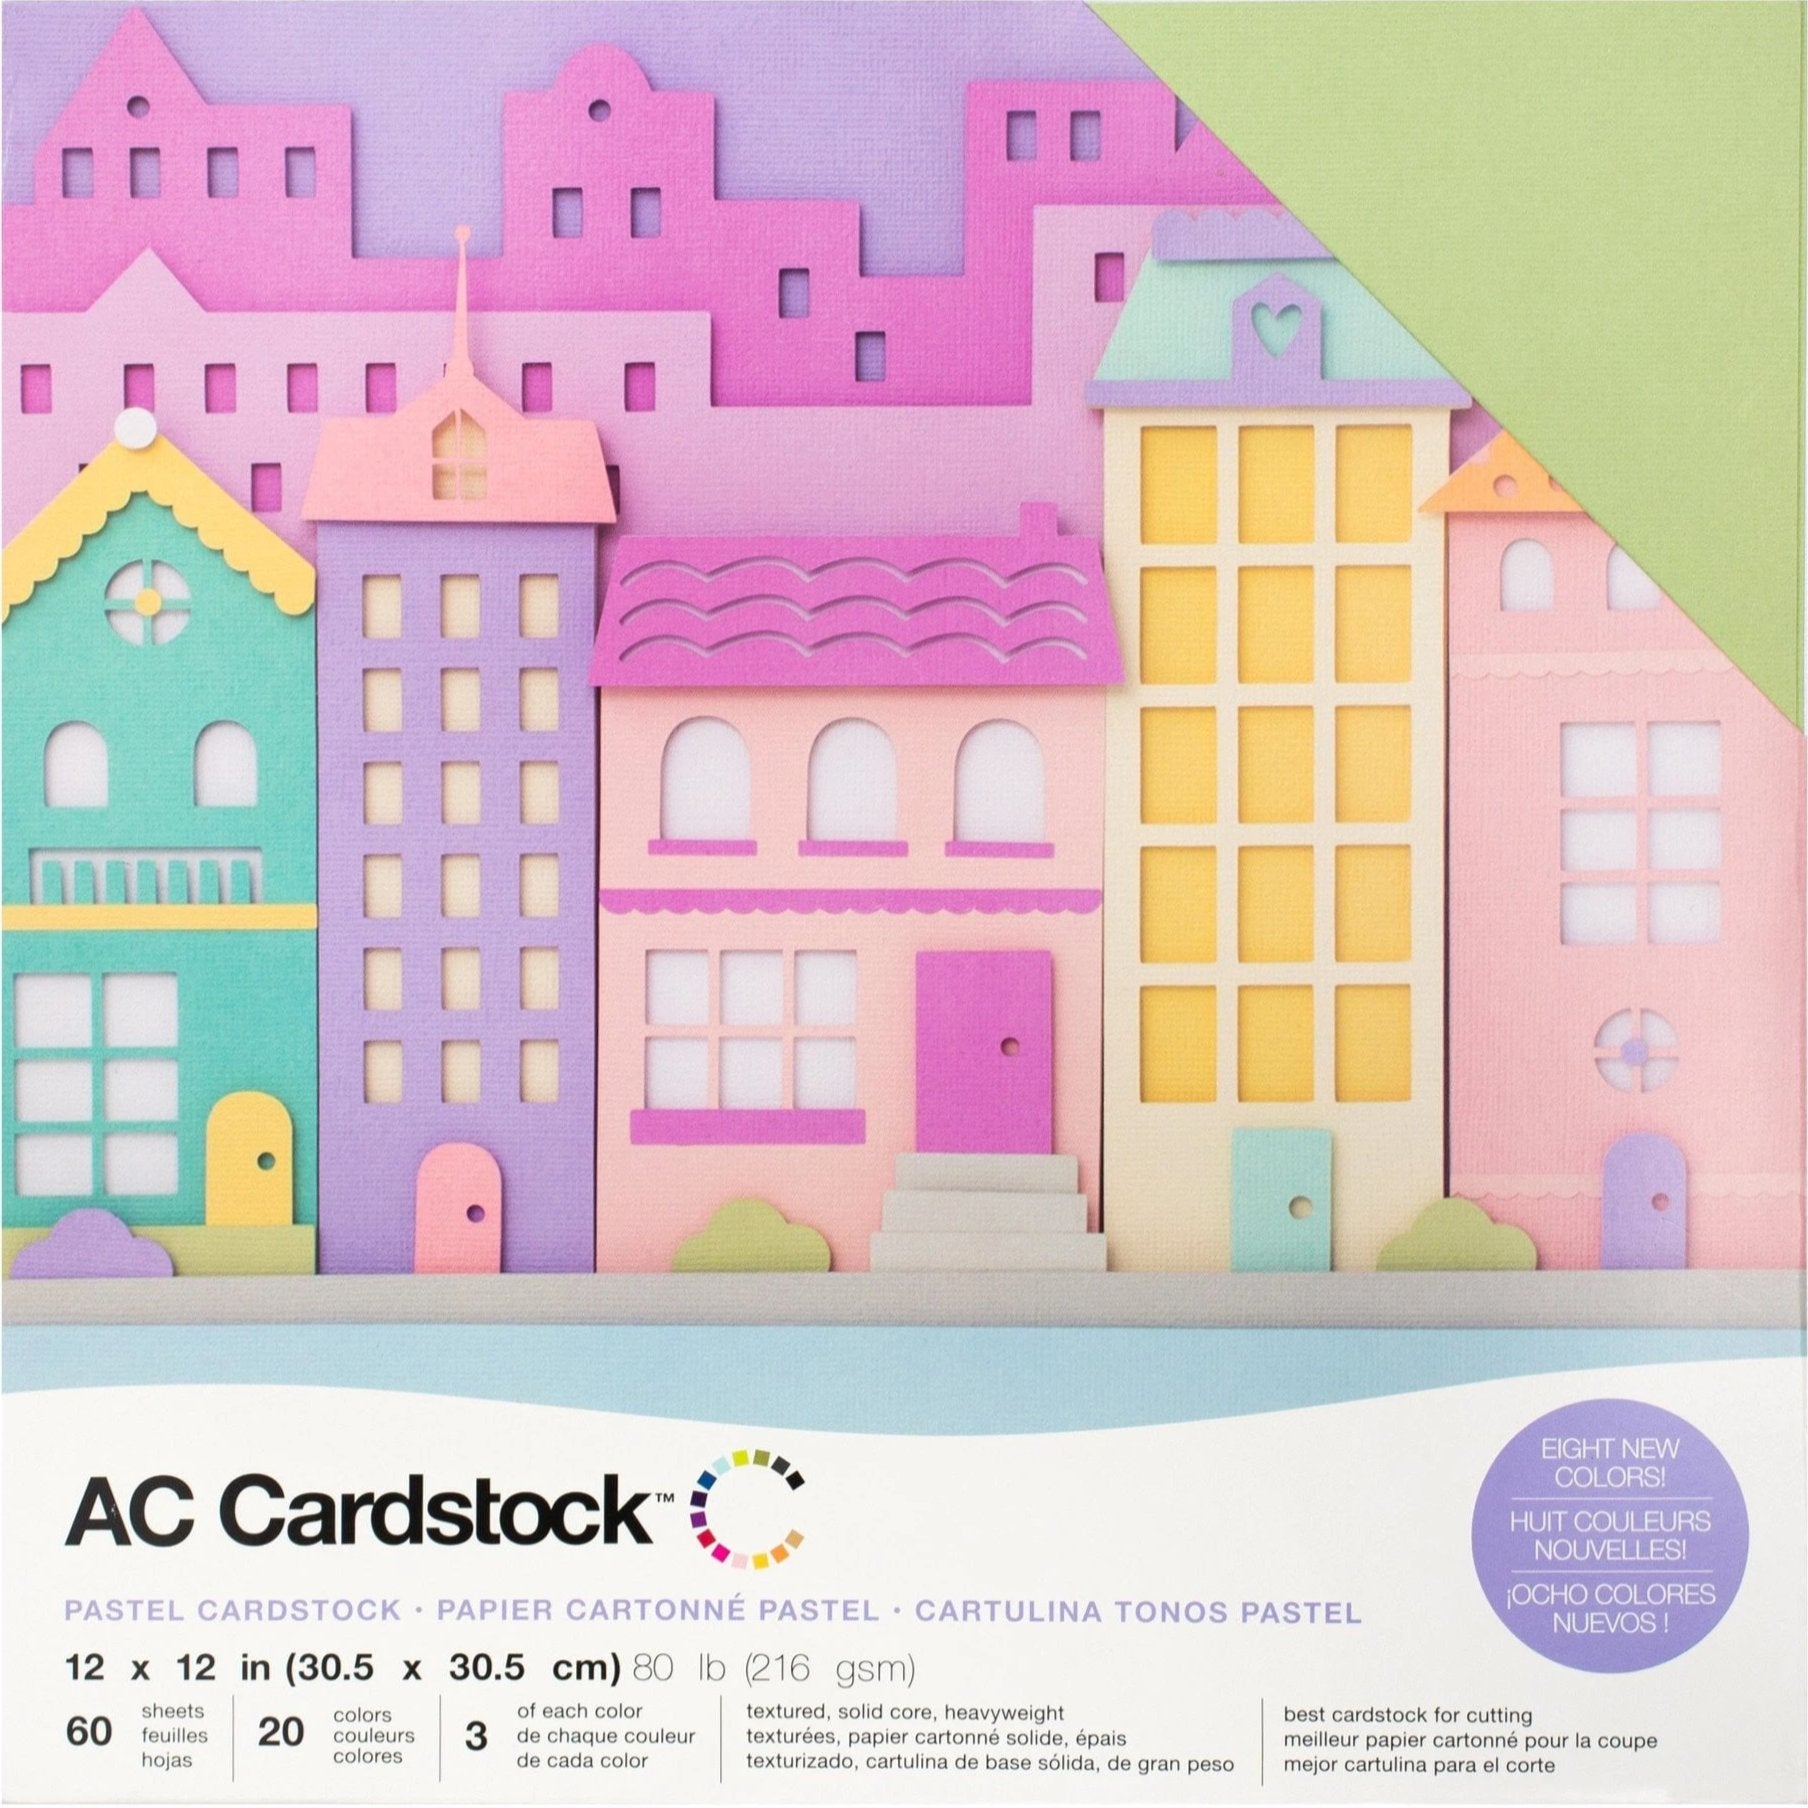 ENVELOPE BY 12X12 CARDSTOCKSHOP - 12x12 Cardstock Shop - Medium